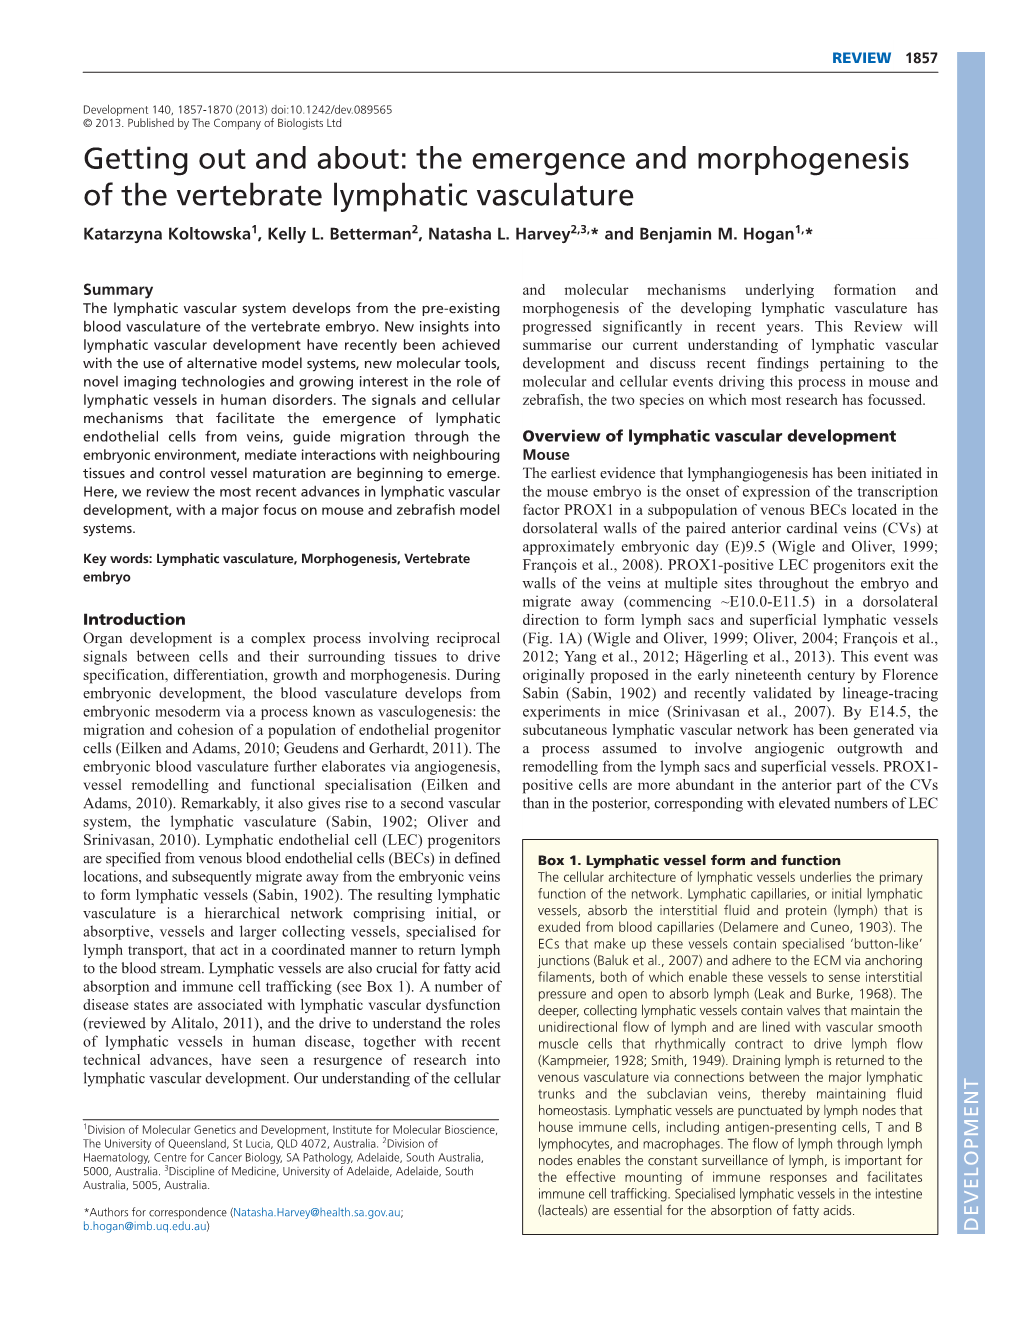 The Emergence and Morphogenesis of the Vertebrate Lymphatic Vasculature Katarzyna Koltowska1, Kelly L